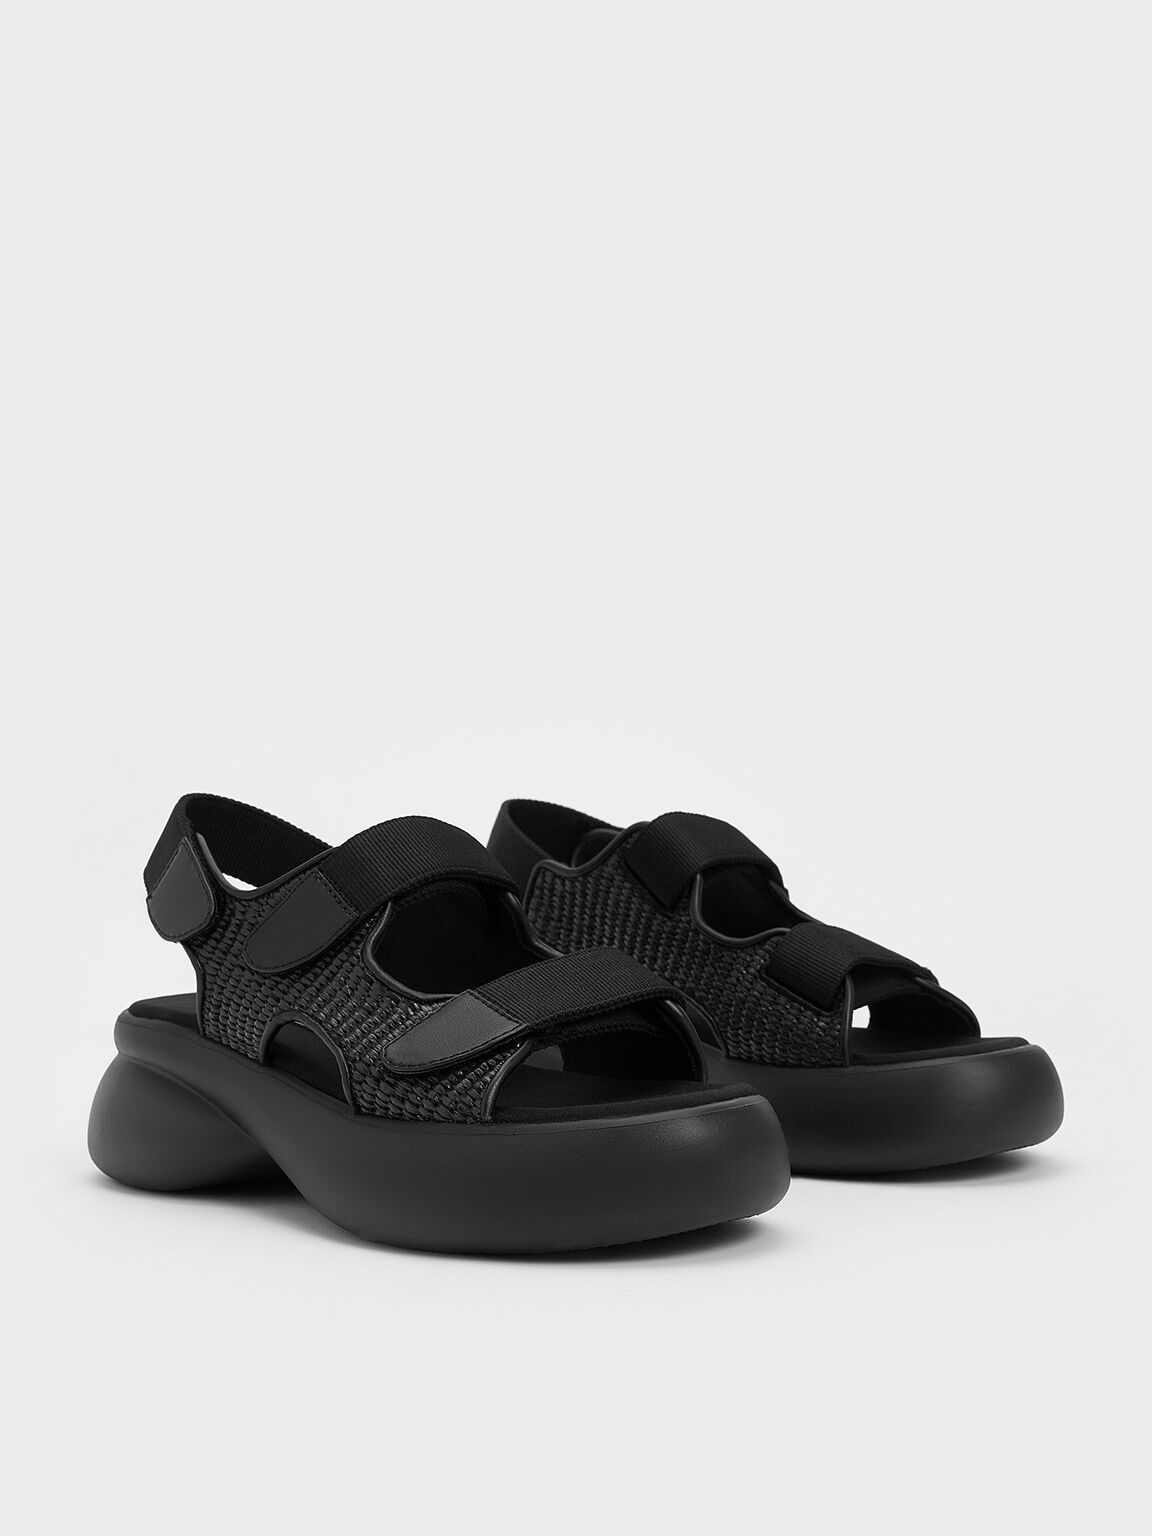 Sandal Sports Double-Strap Woven, Black Textured, hi-res